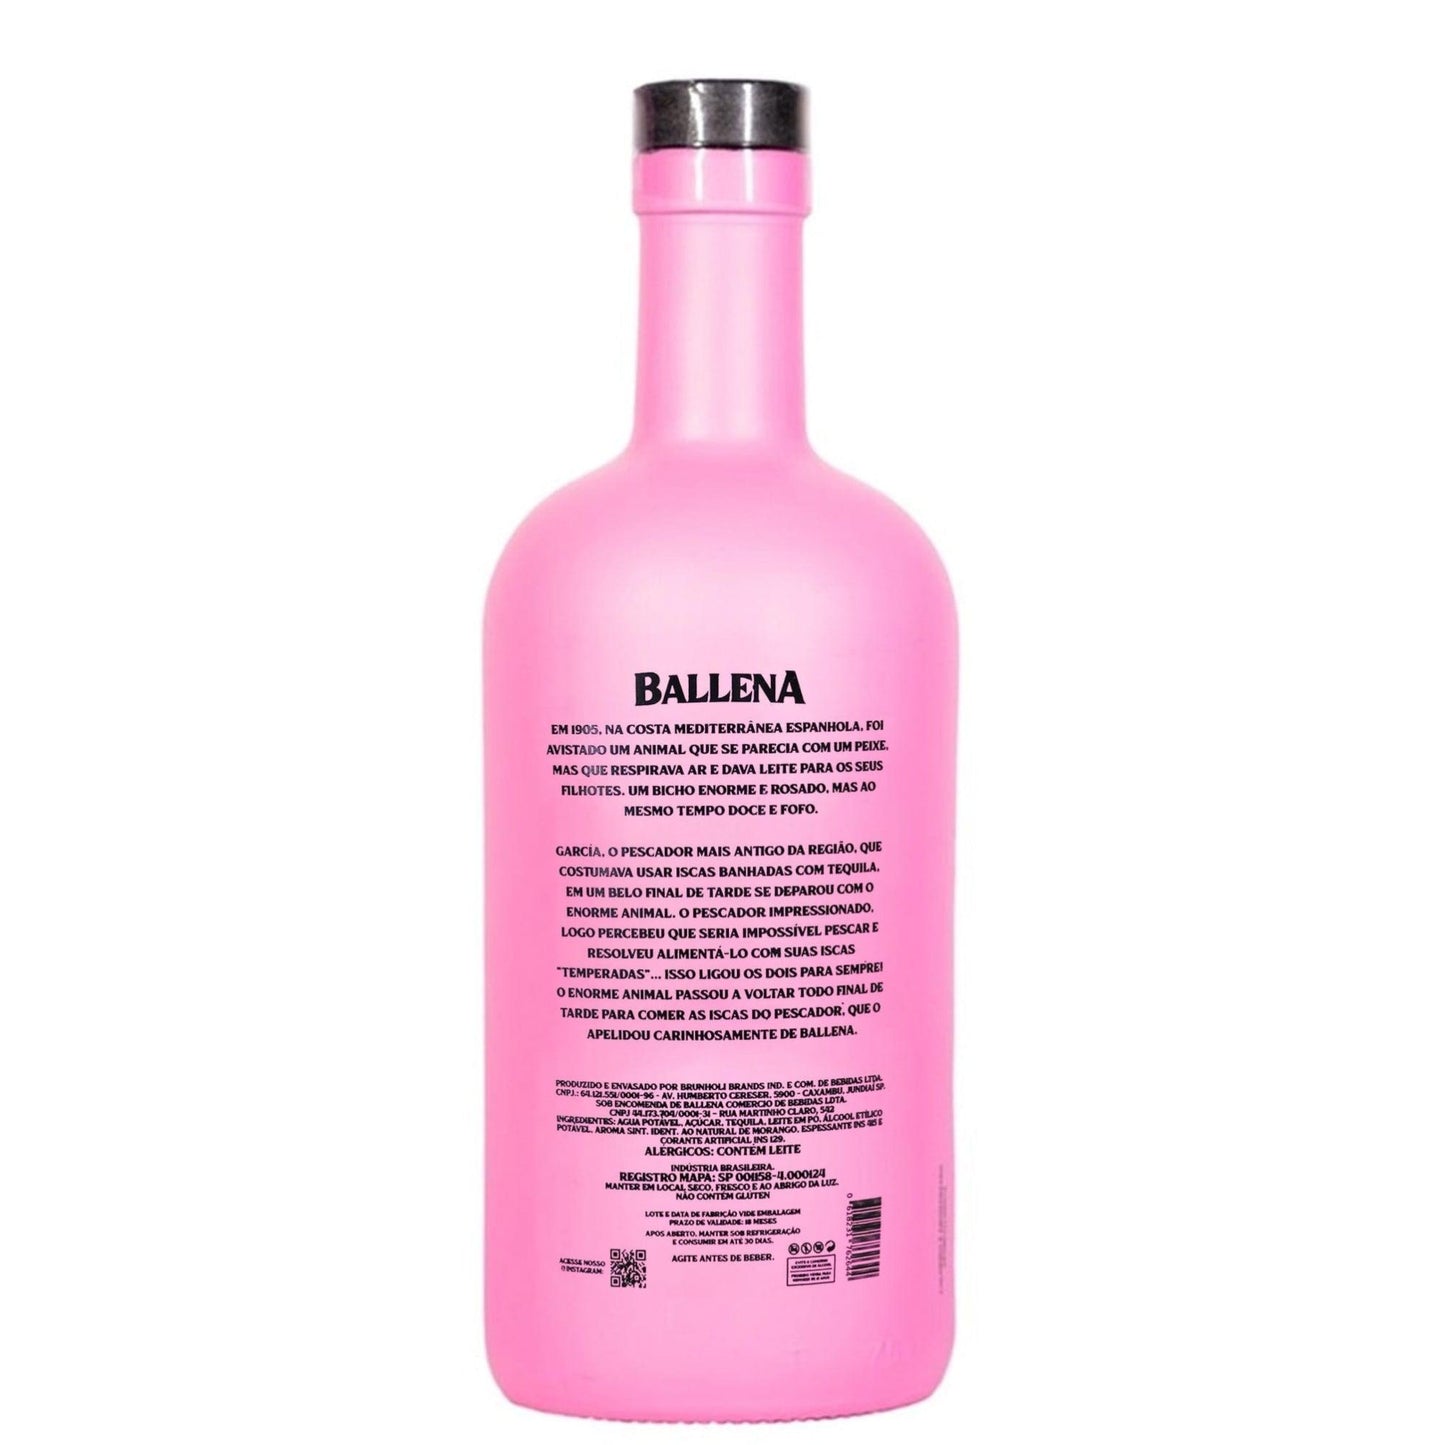 Ballena Strawberry Cream Liqueur with Tequila 750ml - Brazilian Shop